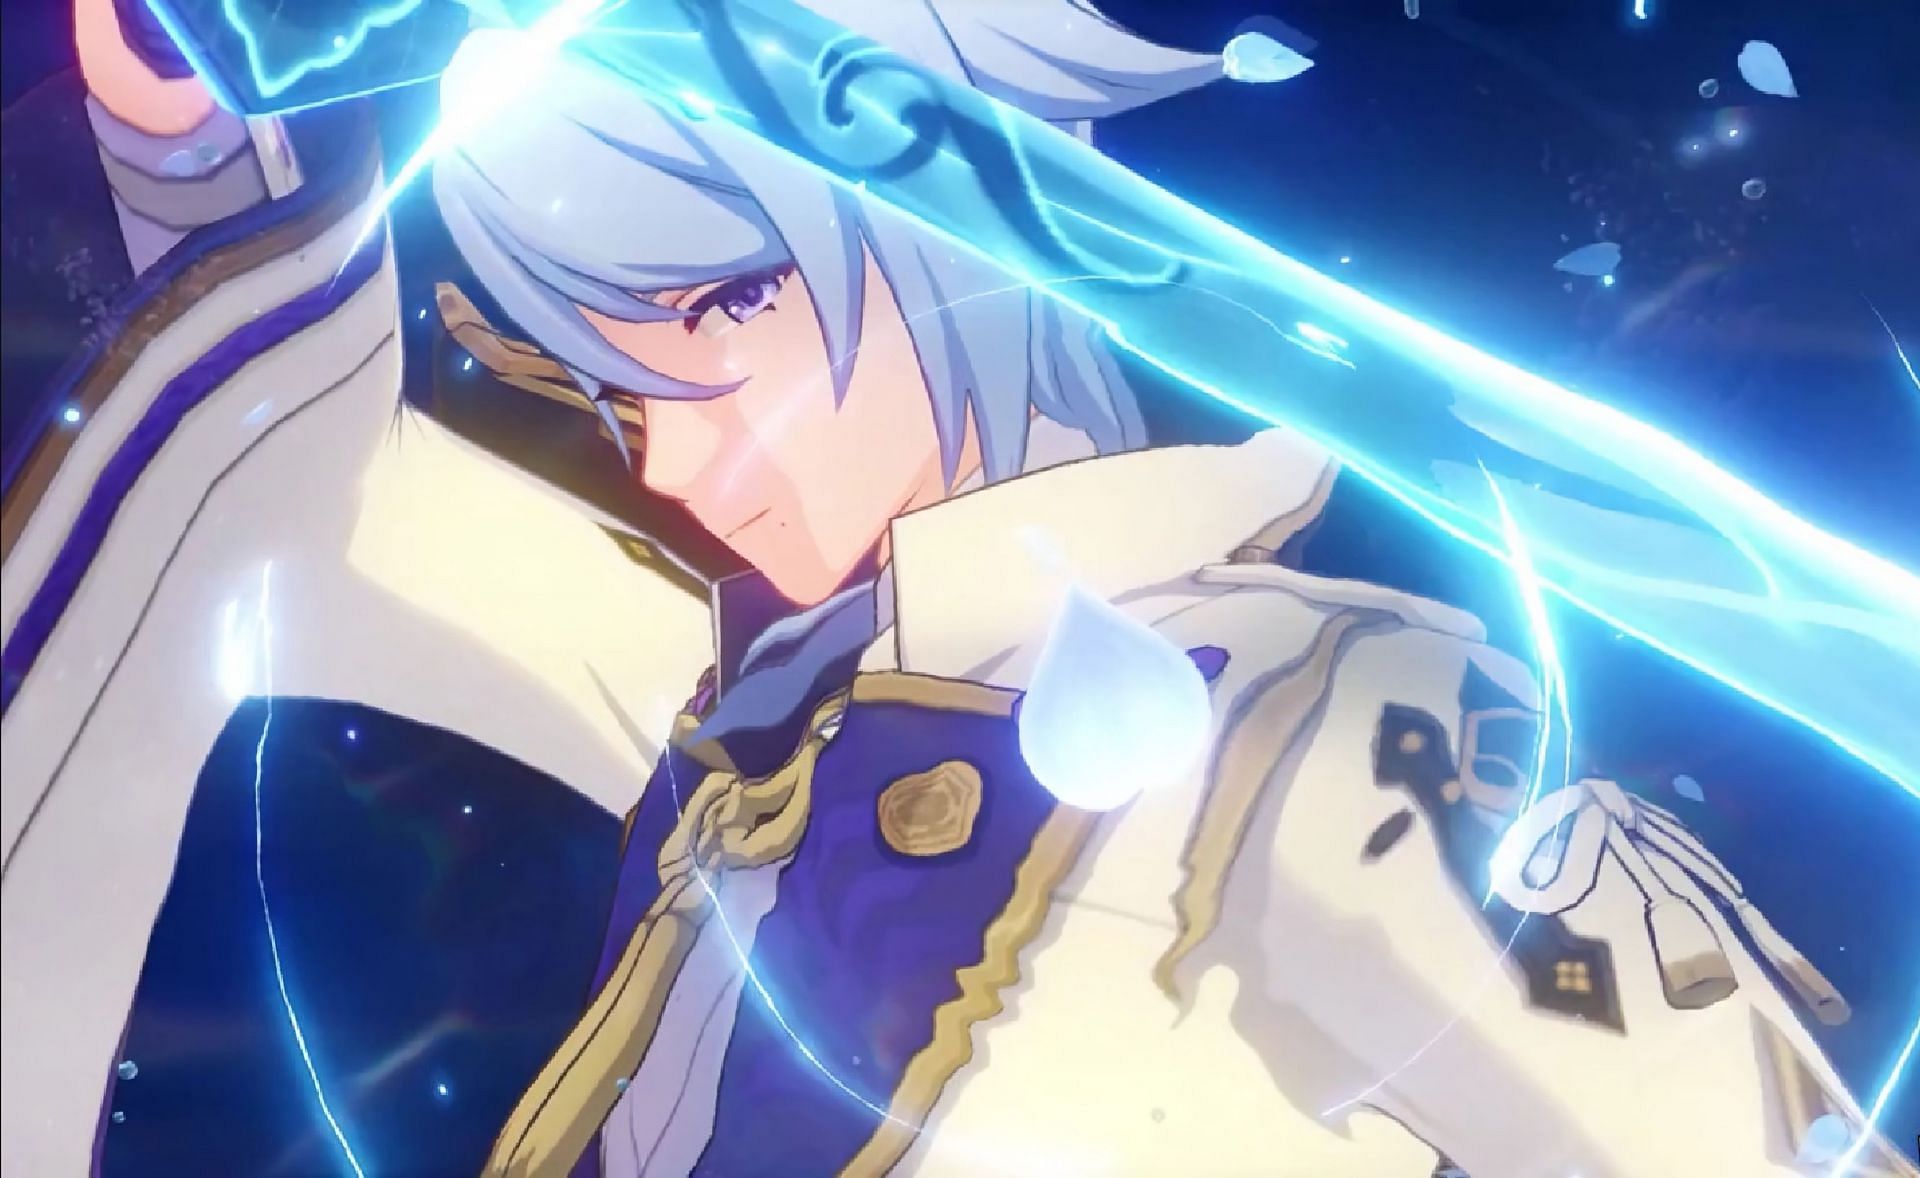 Genshin Impact 2.6 leaks: Ayato gameplay reveals elemental skill and burst animations